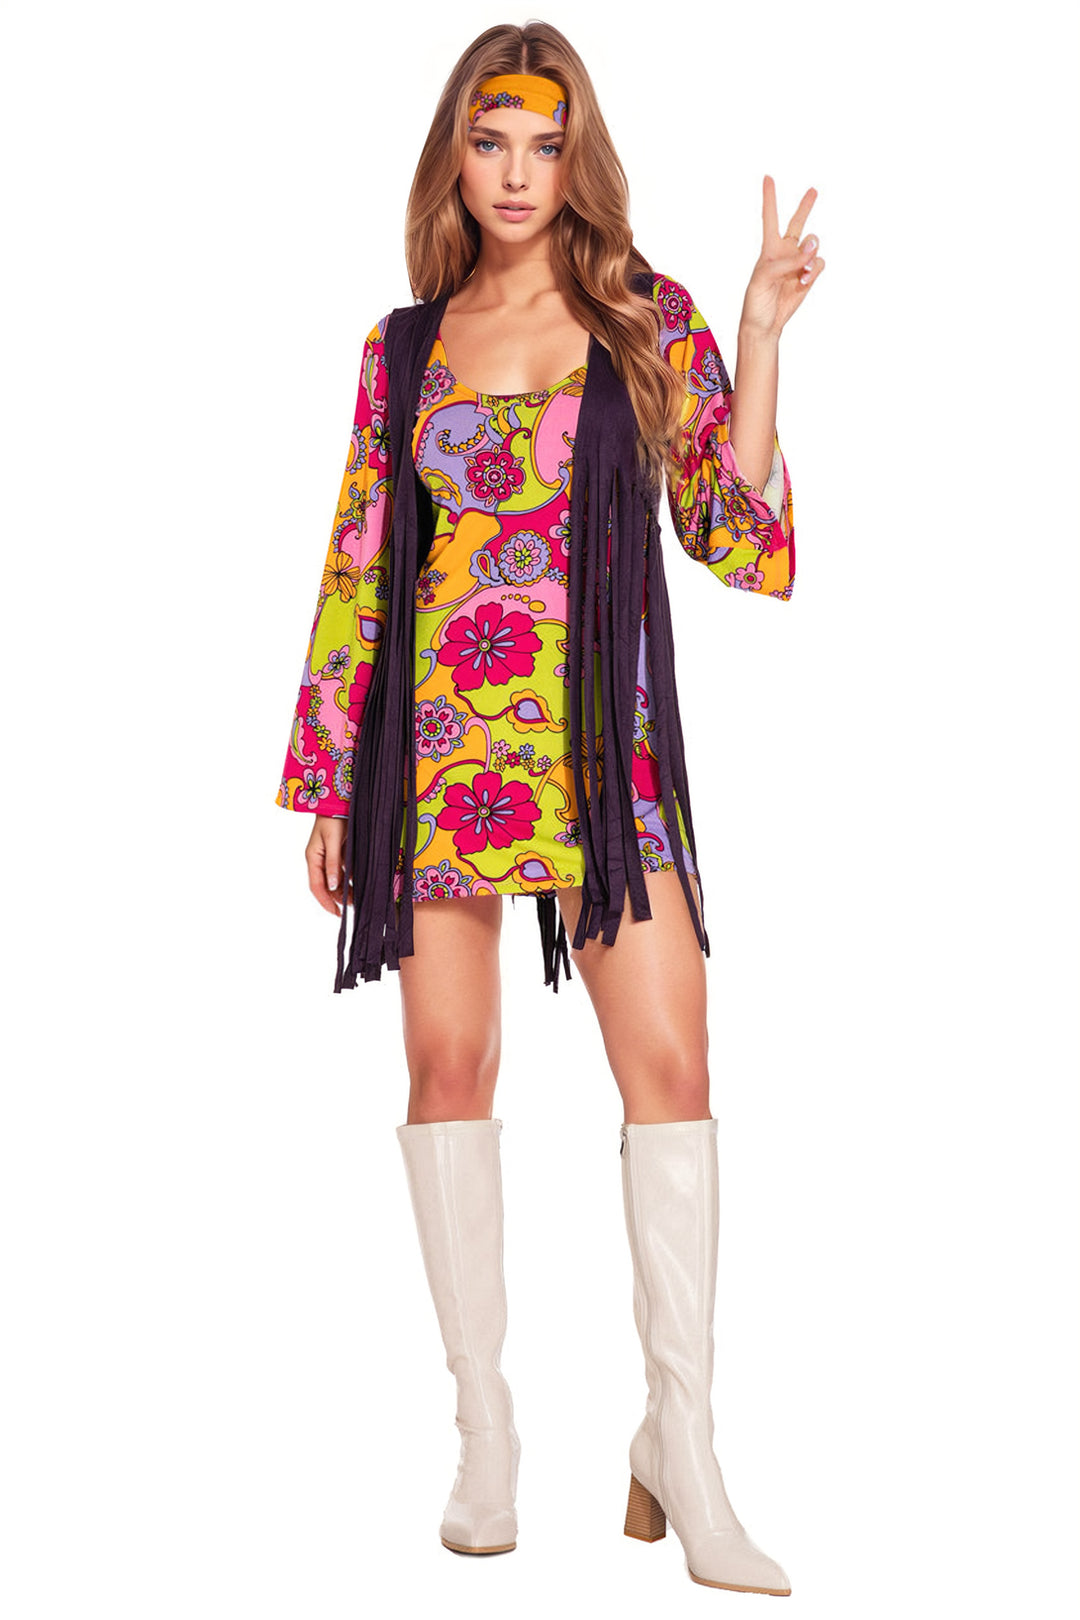 Women's Sexy Hippie Costume – Delightfully Vixen